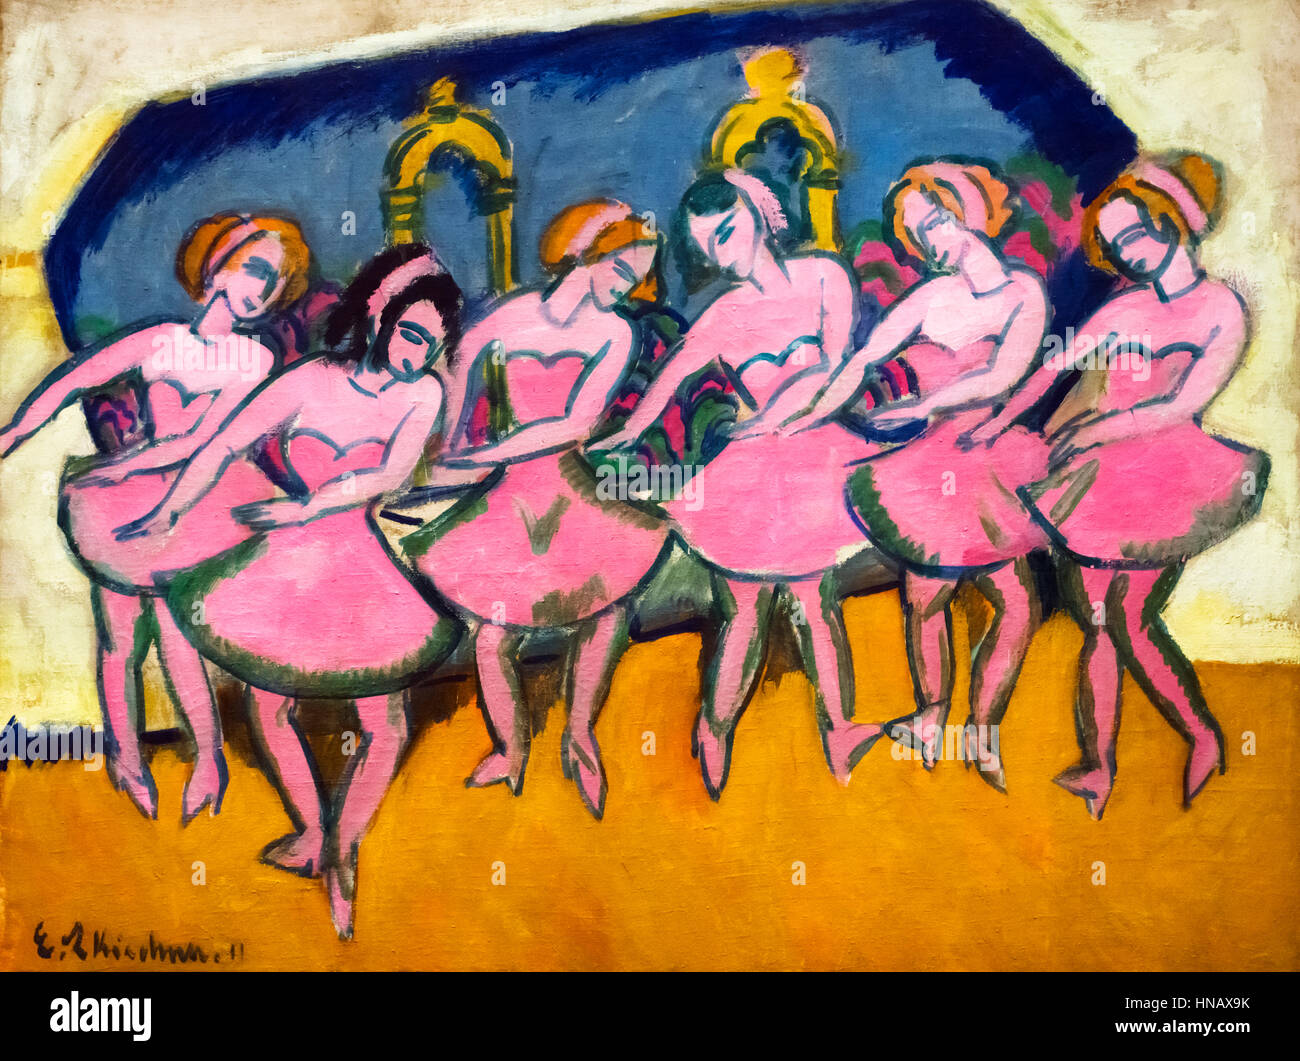 Kirchner, la pintura expresionista. 'Six bailarines' por Ernst Ludwig Kirchner (1880-1938), óleo sobre lienzo, 1911. Foto de stock